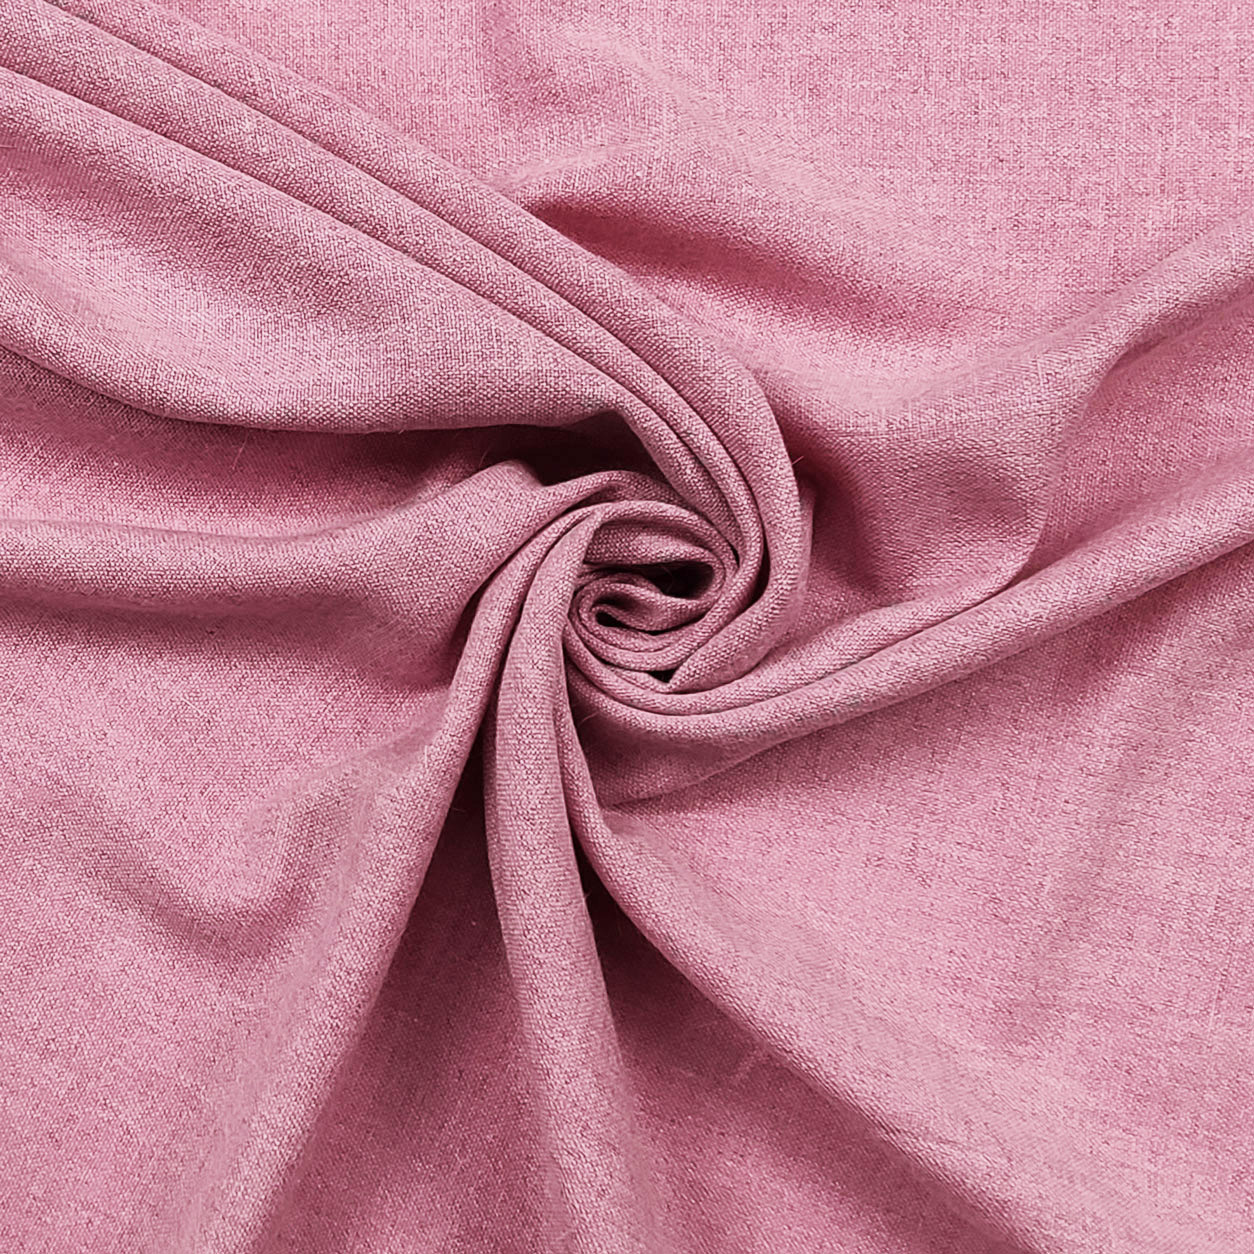 tessuto-mussola-rosa-lana